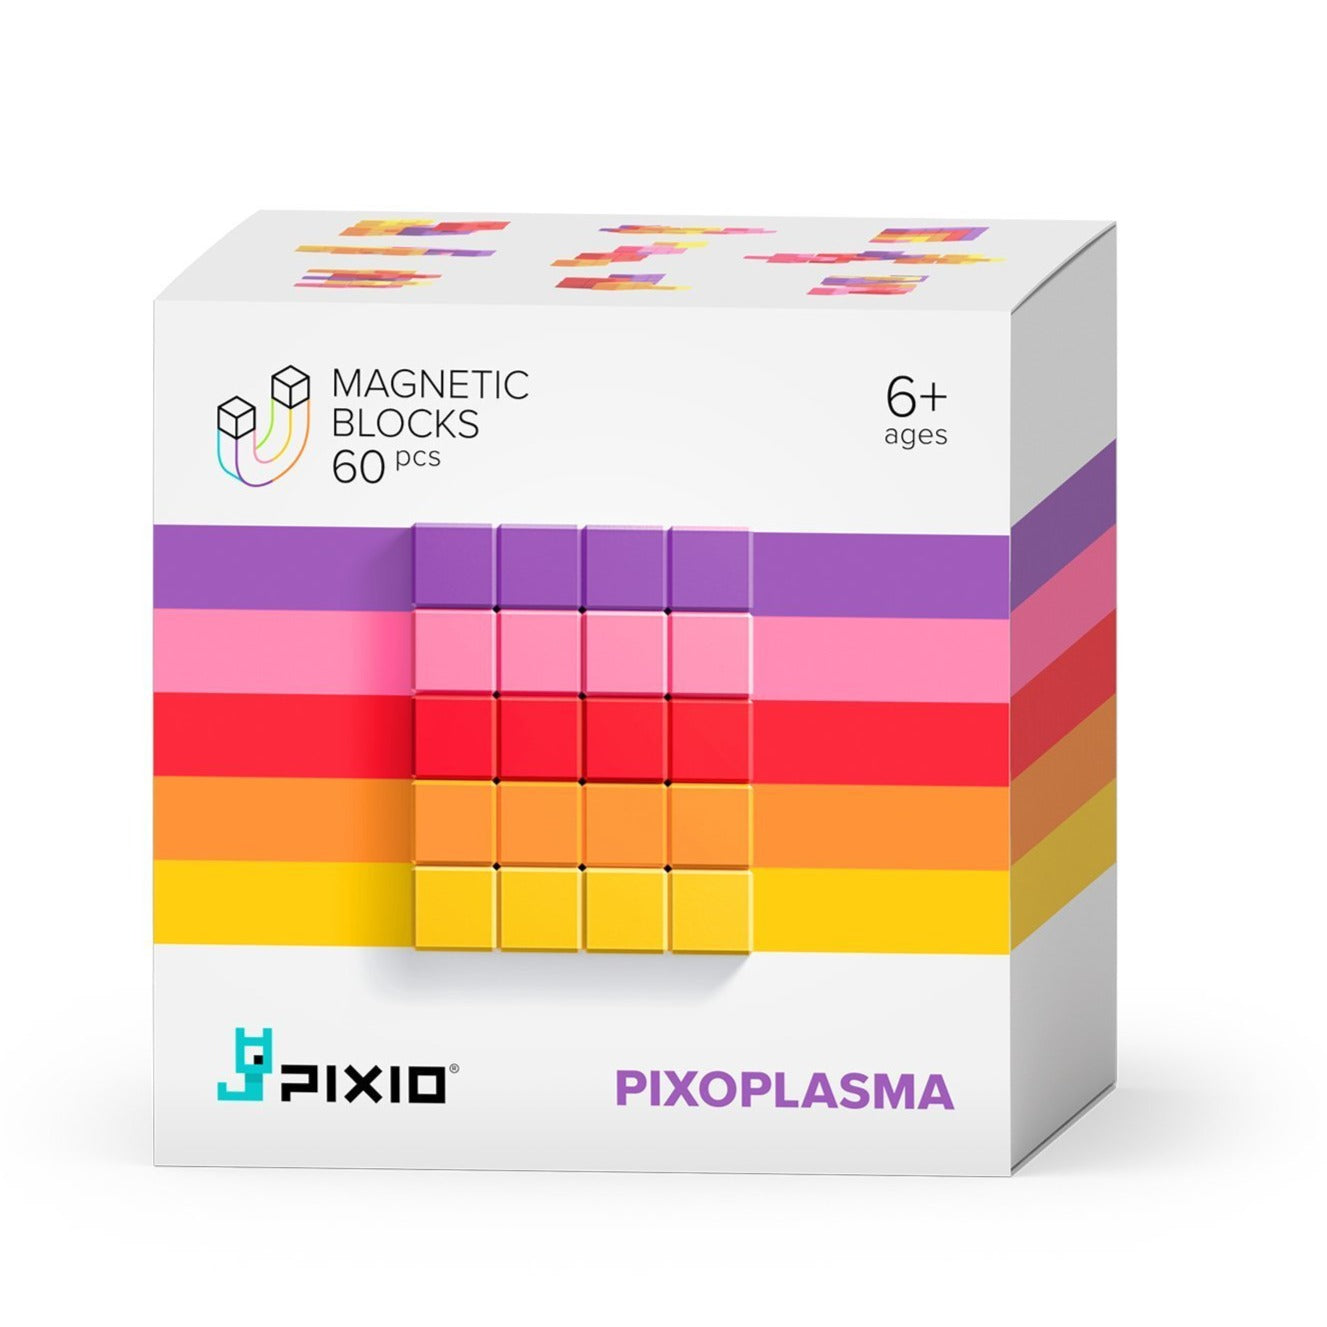 PIXIO-PIXOPLASMA-Abstract-Series-Magnetic-Blocks-Pack-1020201_2000x_26362af0-0430-4e58-a7fa-7b952b876504.jpg